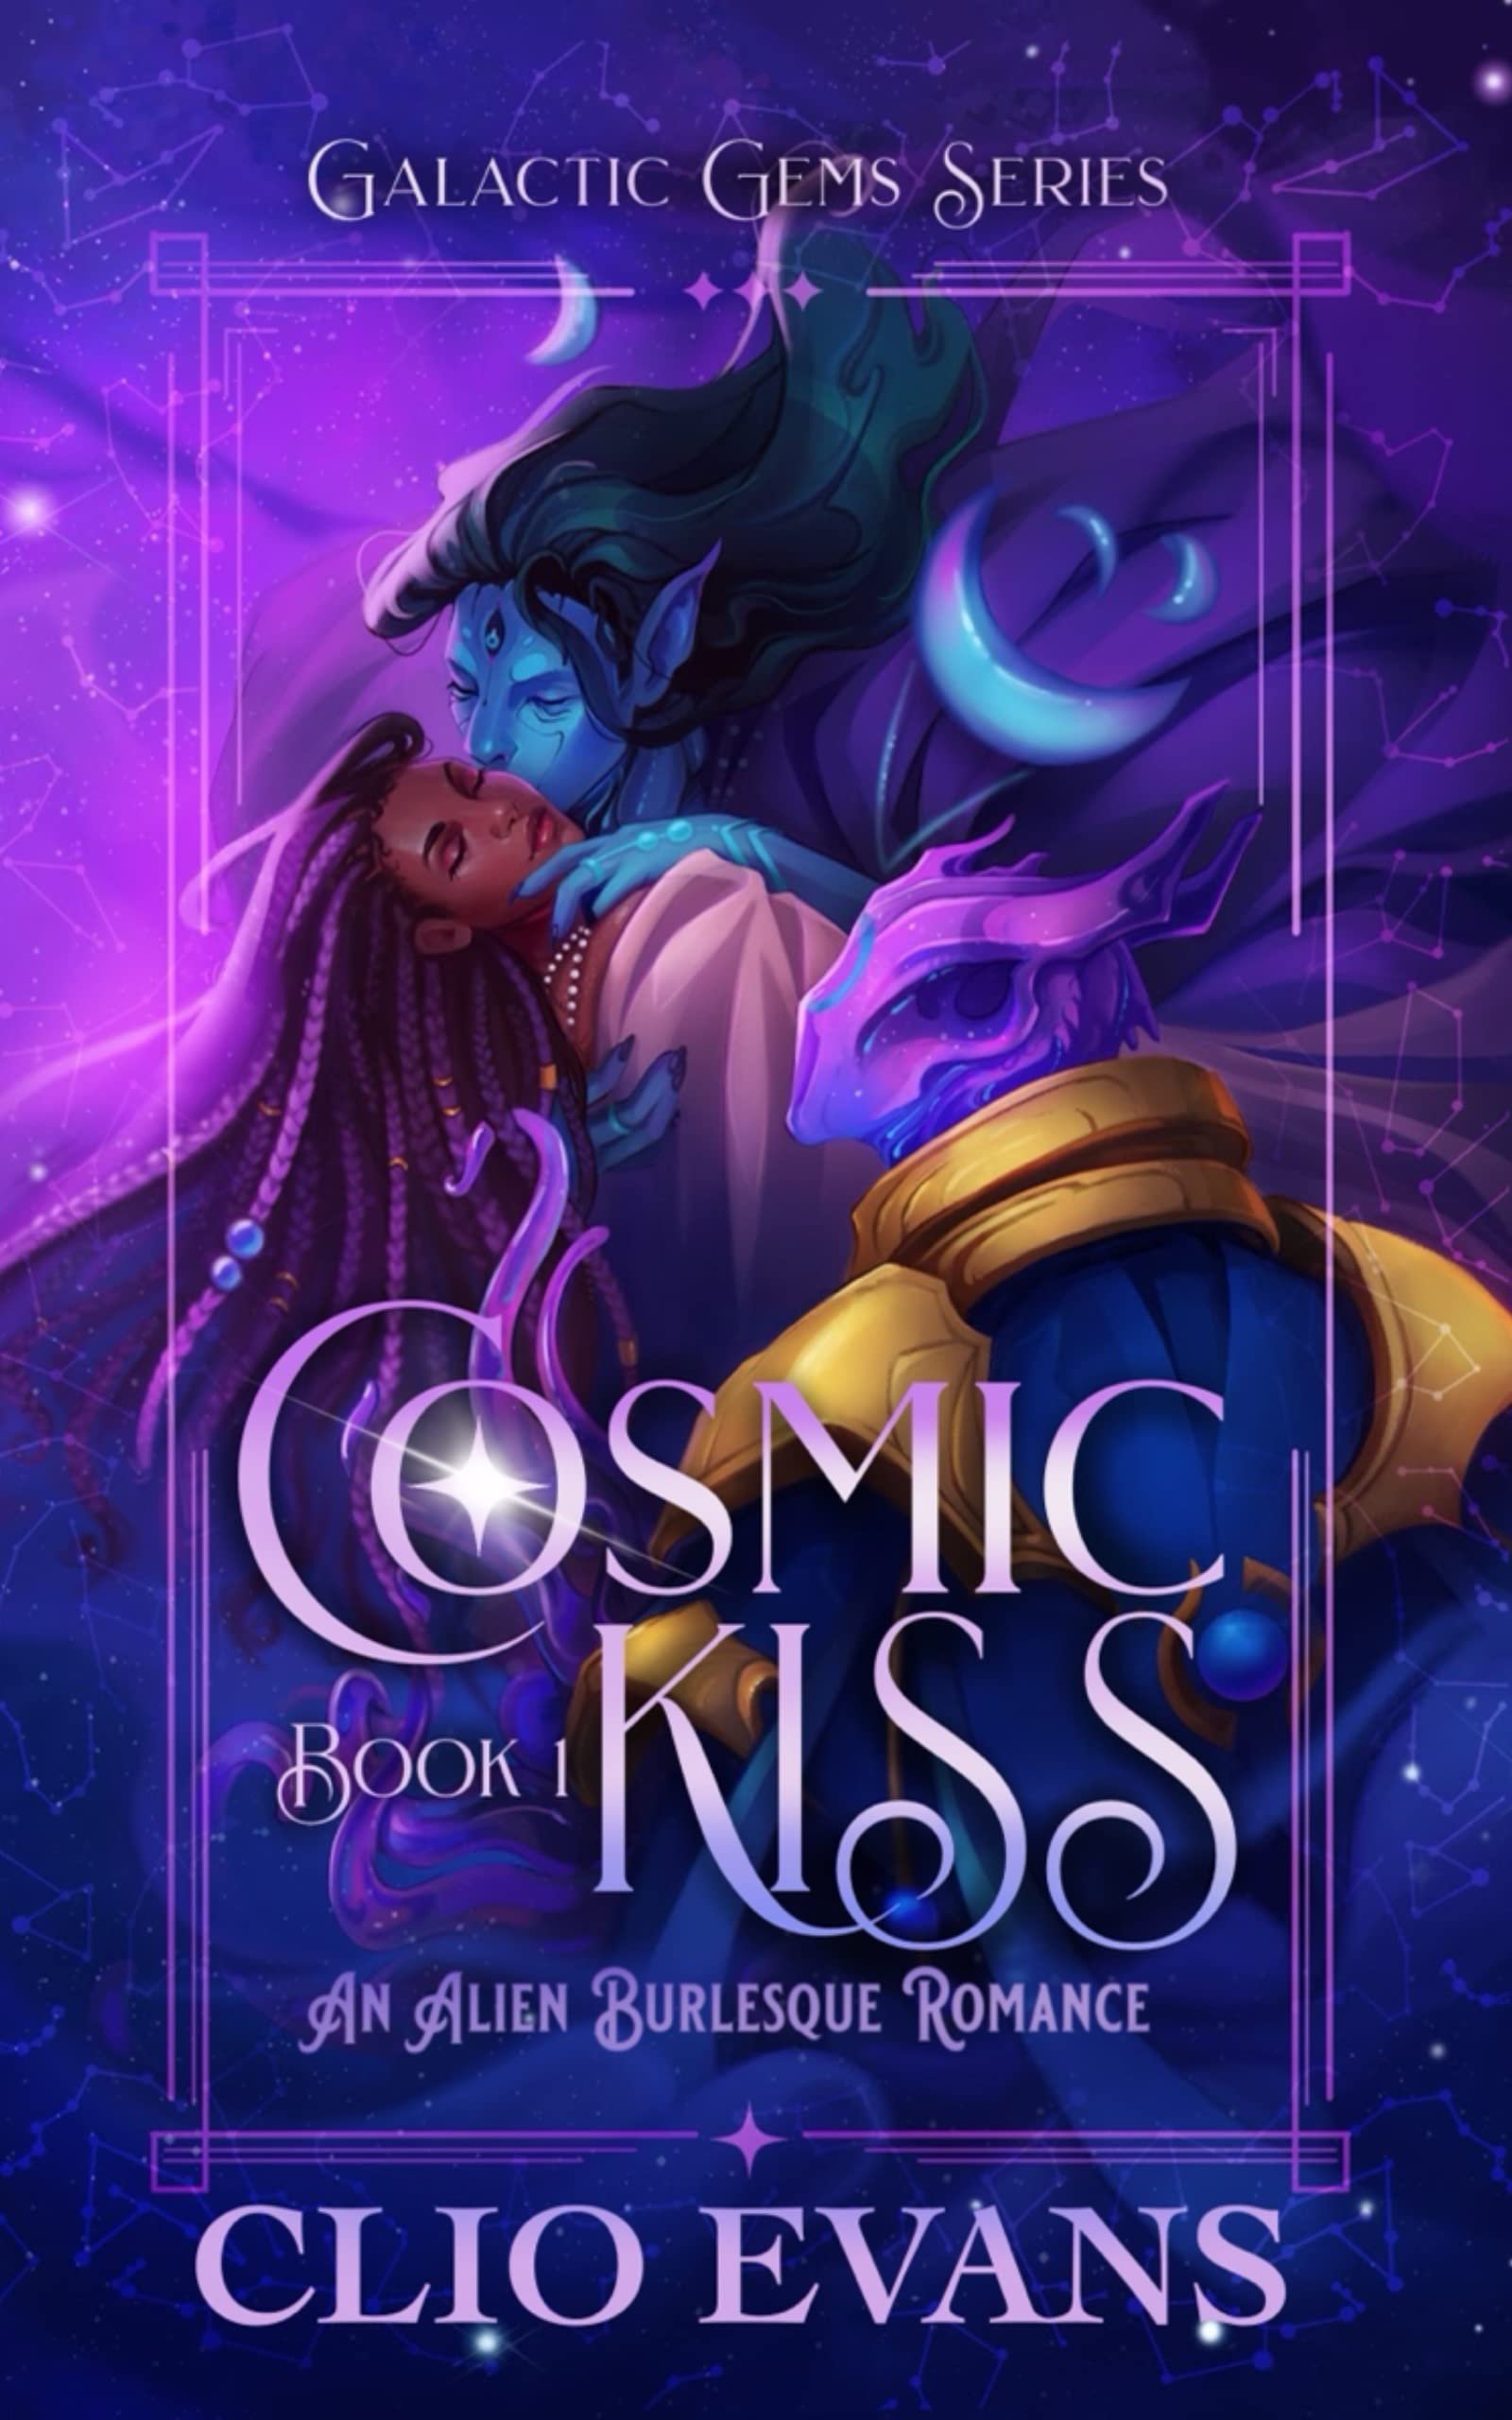 Cosmic Kiss: An Alien Burlesque Romance (Galactic Gems Series Book 1) Cover